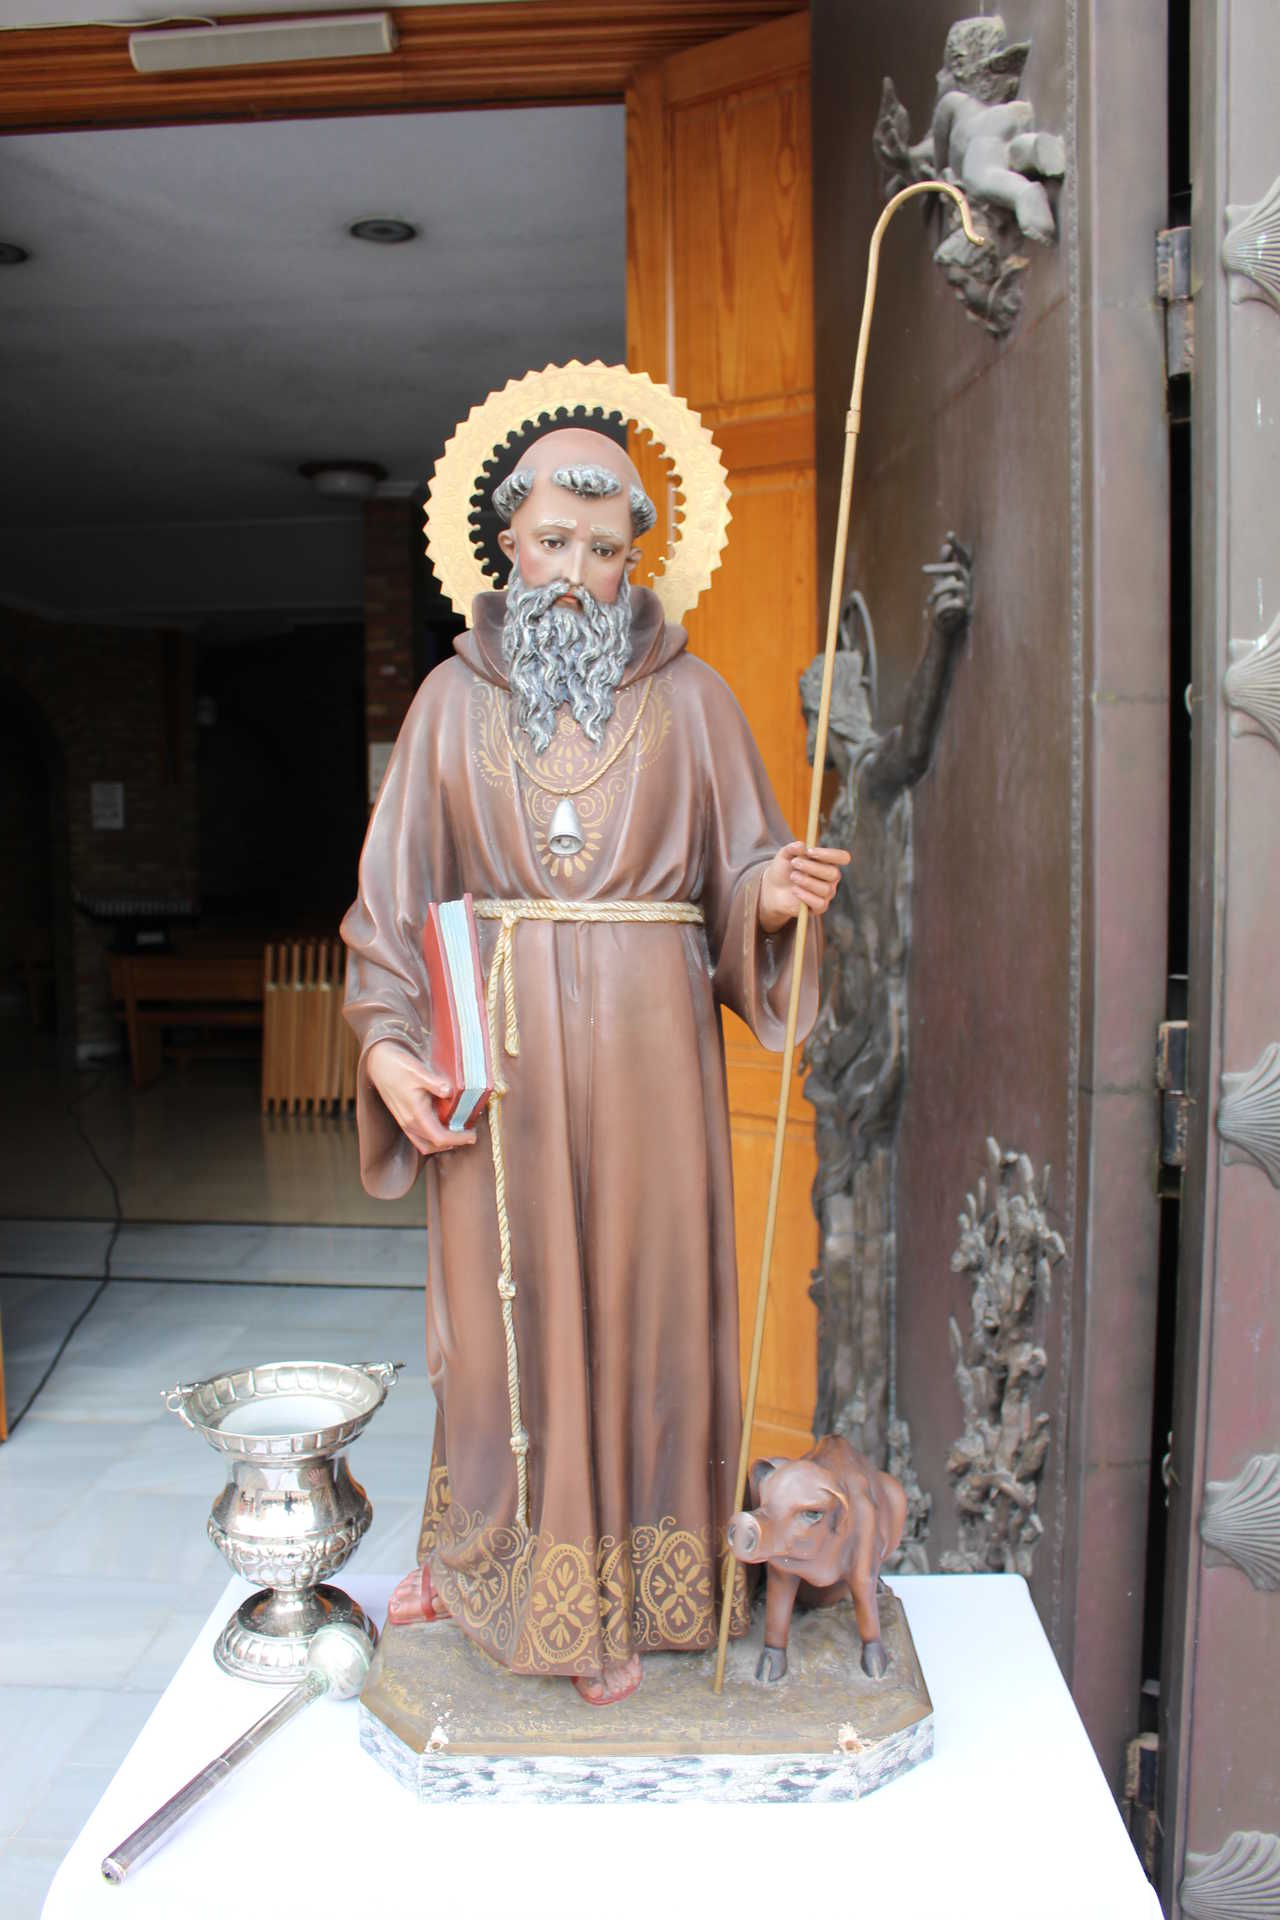 FESTIVITIES OF ST. ANTHONY IN PILAR DE LA HORADADA